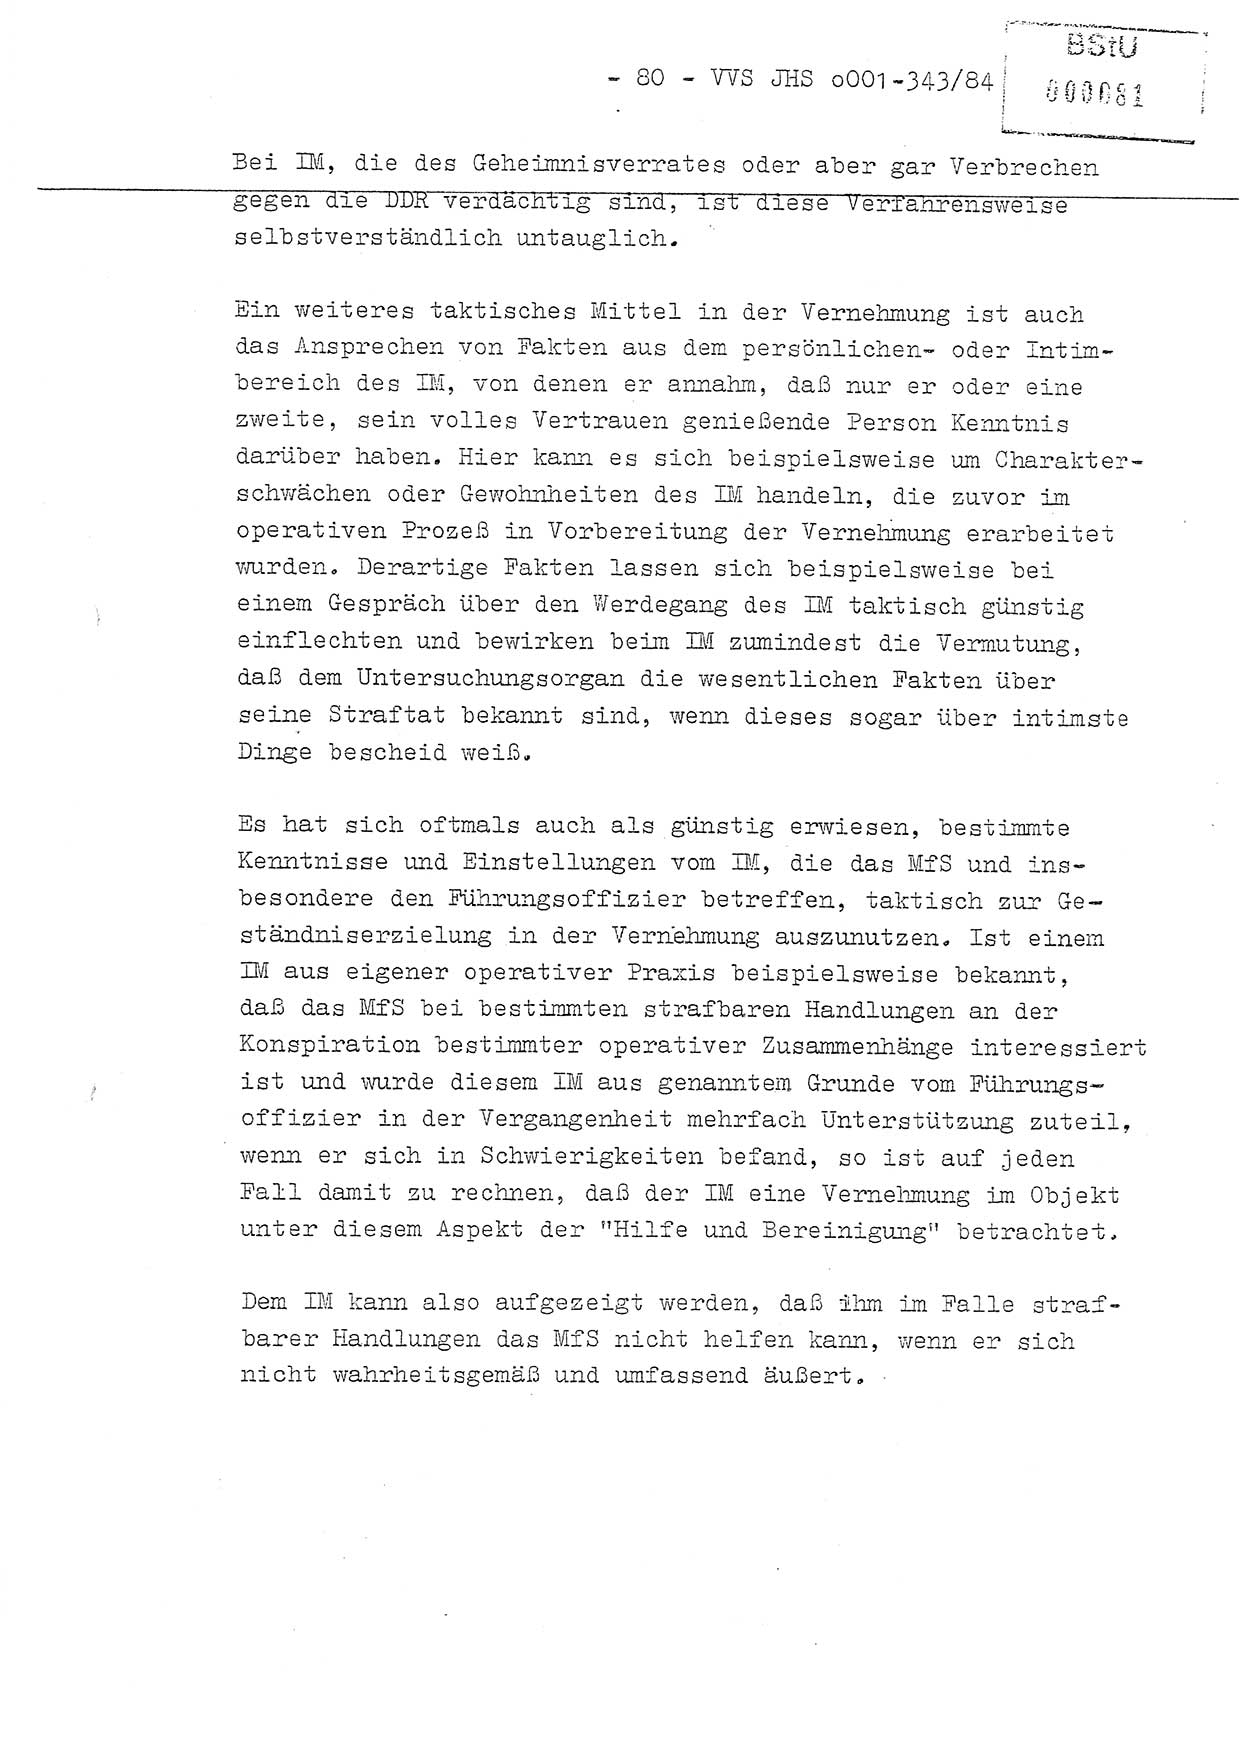 Diplomarbeit, Oberleutnant Bernd Michael (HA Ⅸ/5), Oberleutnant Peter Felber (HA IX/5), Ministerium für Staatssicherheit (MfS) [Deutsche Demokratische Republik (DDR)], Juristische Hochschule (JHS), Vertrauliche Verschlußsache (VVS) o001-343/84, Potsdam 1985, Seite 80 (Dipl.-Arb. MfS DDR JHS VVS o001-343/84 1985, S. 80)